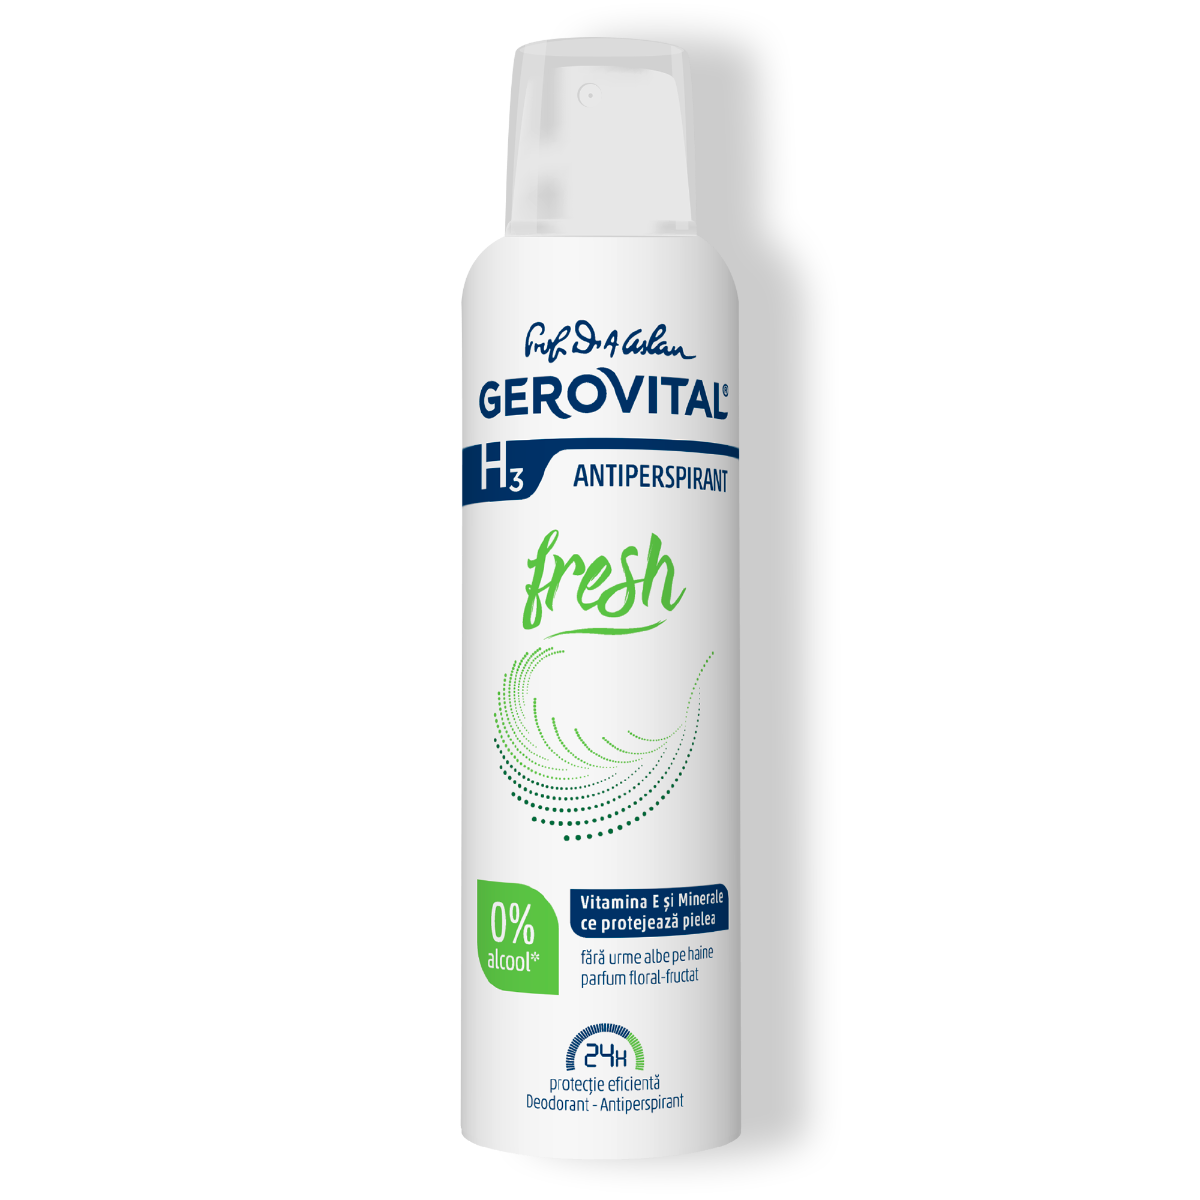 Deodorant Antiperspirant Gerovital H3 – Fresh